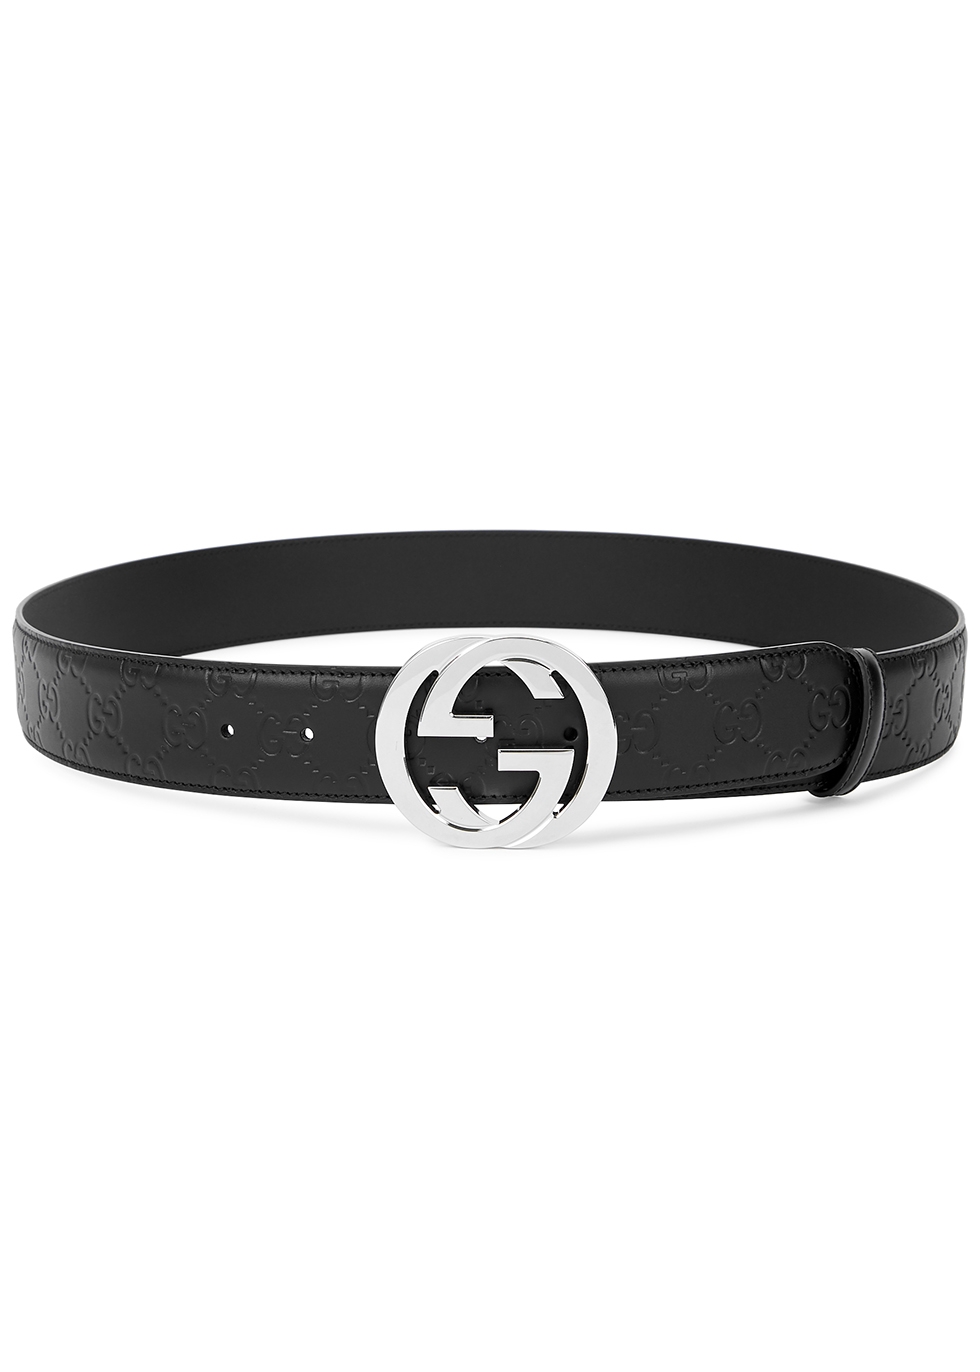 Gucci GG black embossed leather belt - Harvey Nichols